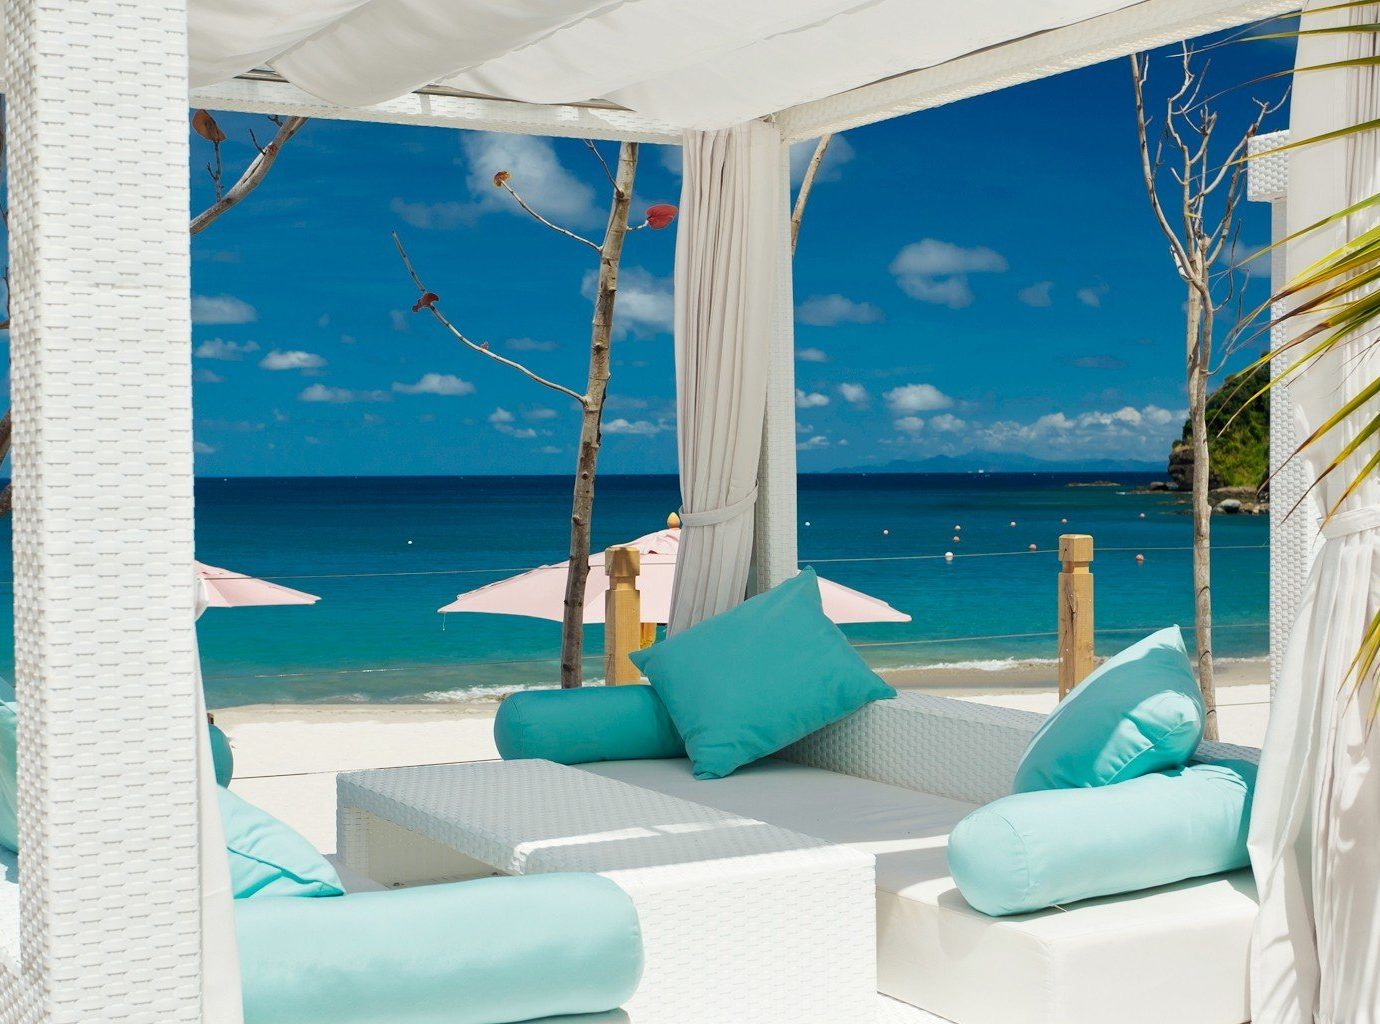 Hotels blue chair room swimming pool caribbean vacation Resort interior design estate Villa apartment furniture several